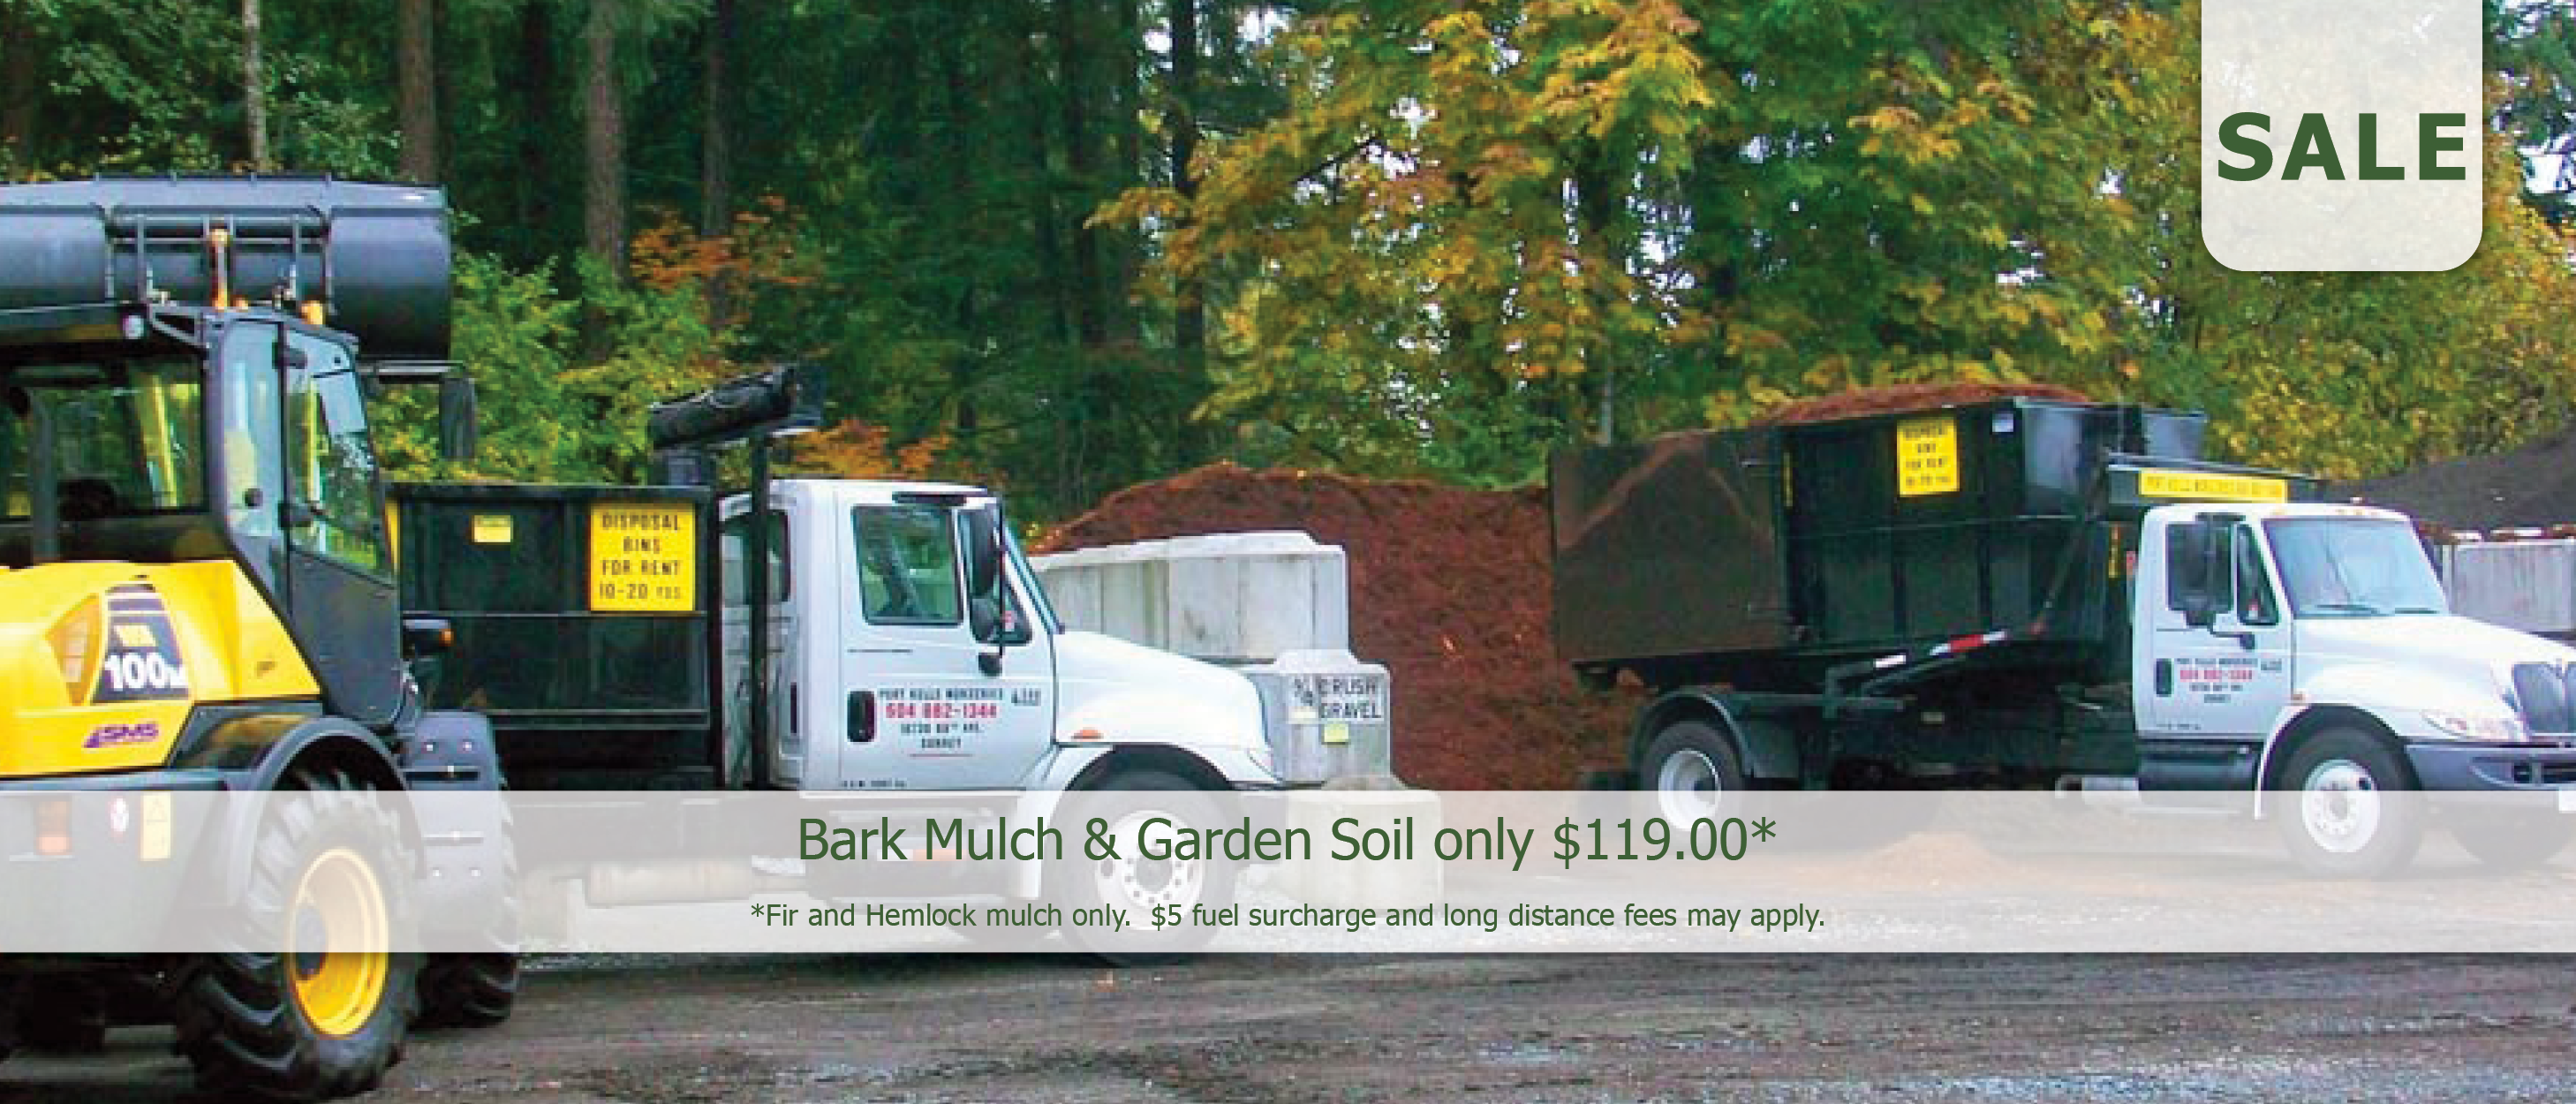 Bark mulch and soil